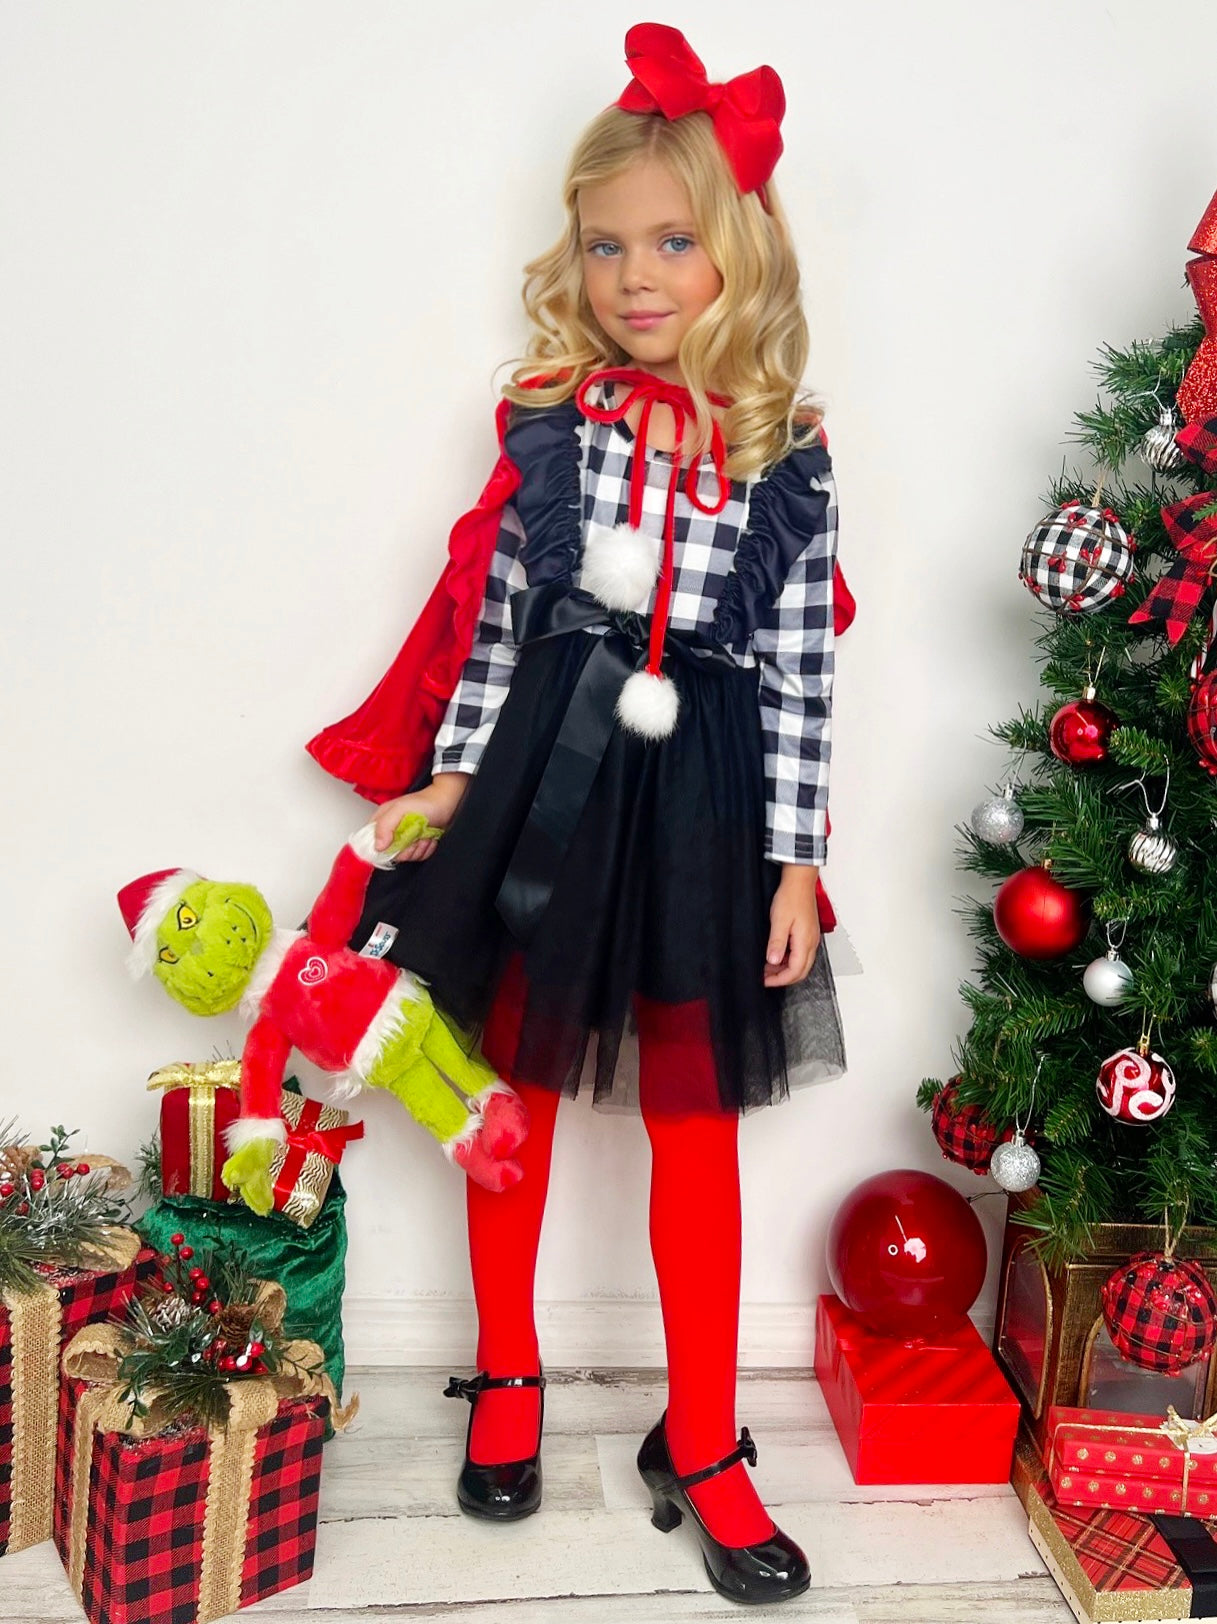 Toddler Clothing Sale | Girls Checkered Plaid Tutu Dress | Boutique